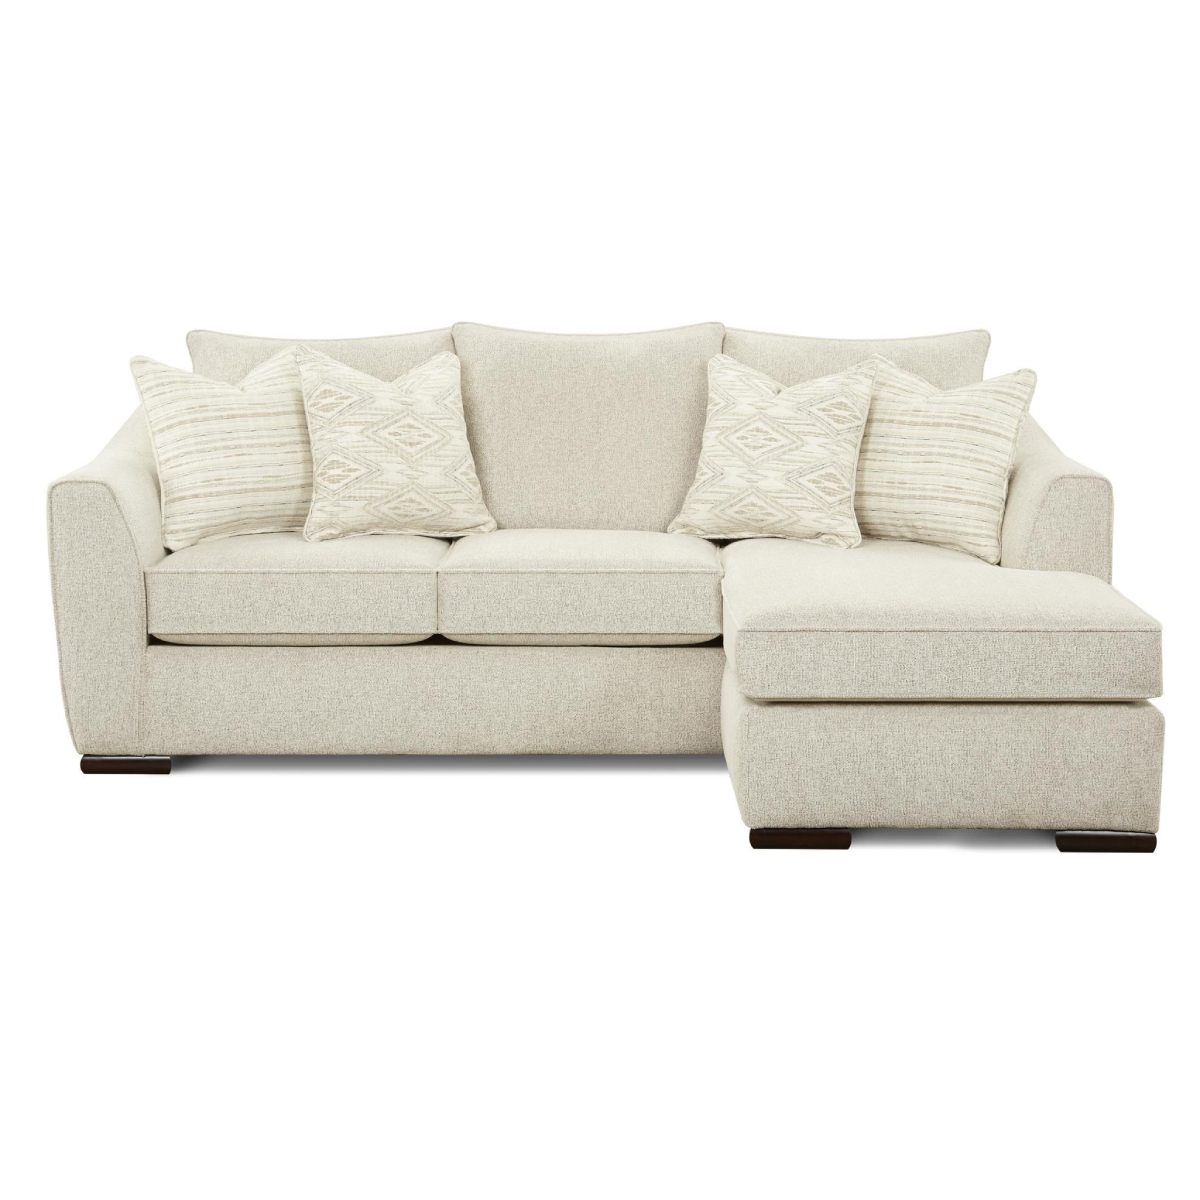 Fusion Furniture Vibrant Vision Oatmeal Sofa with Chaise